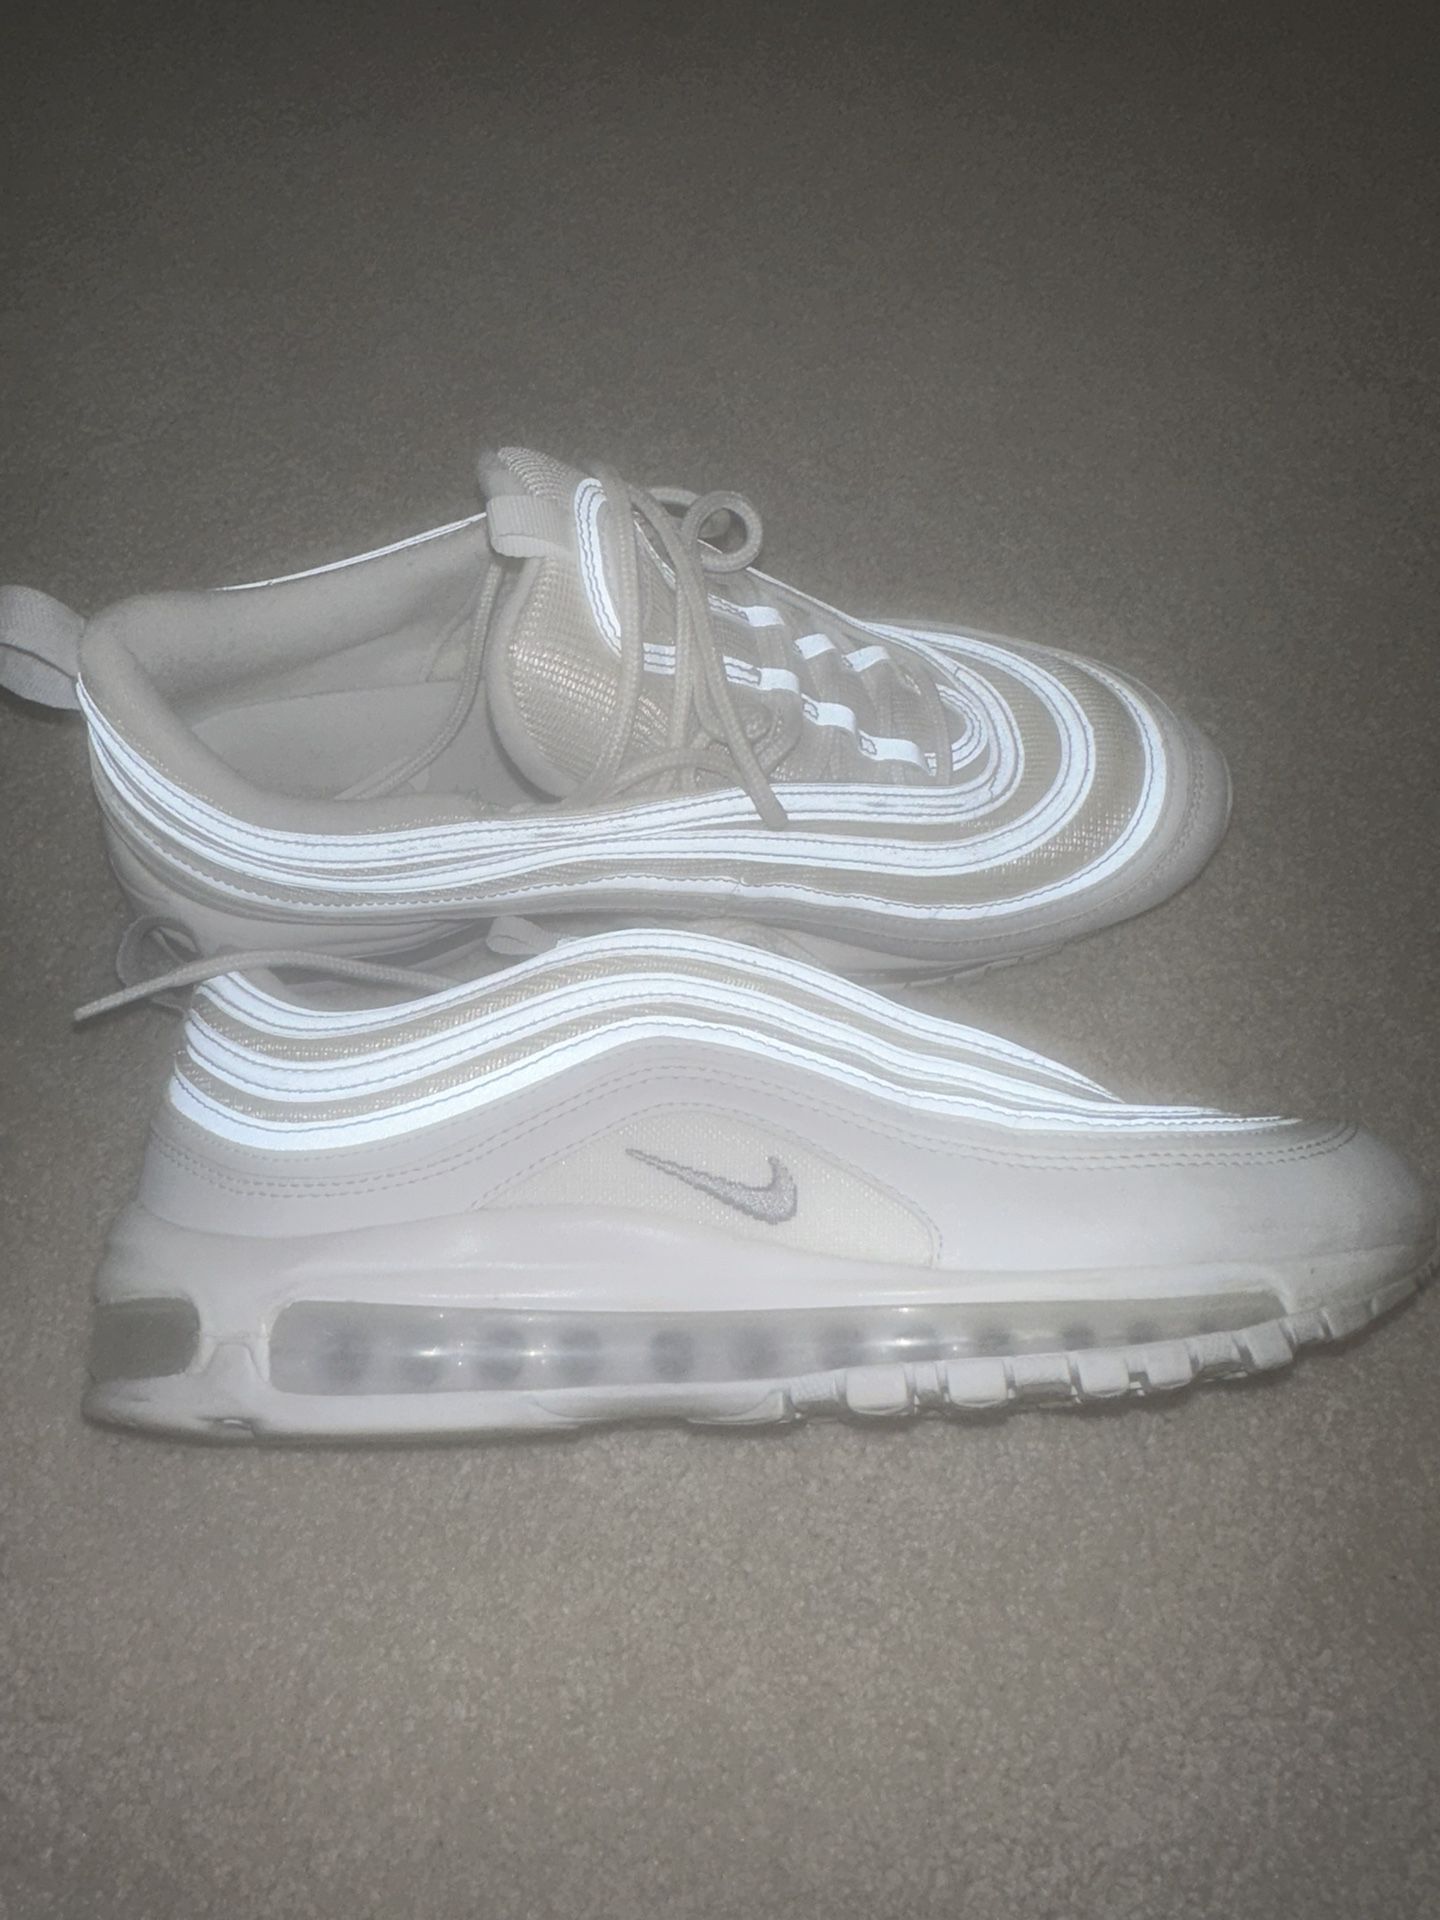 Men’s White Nike Shoe 